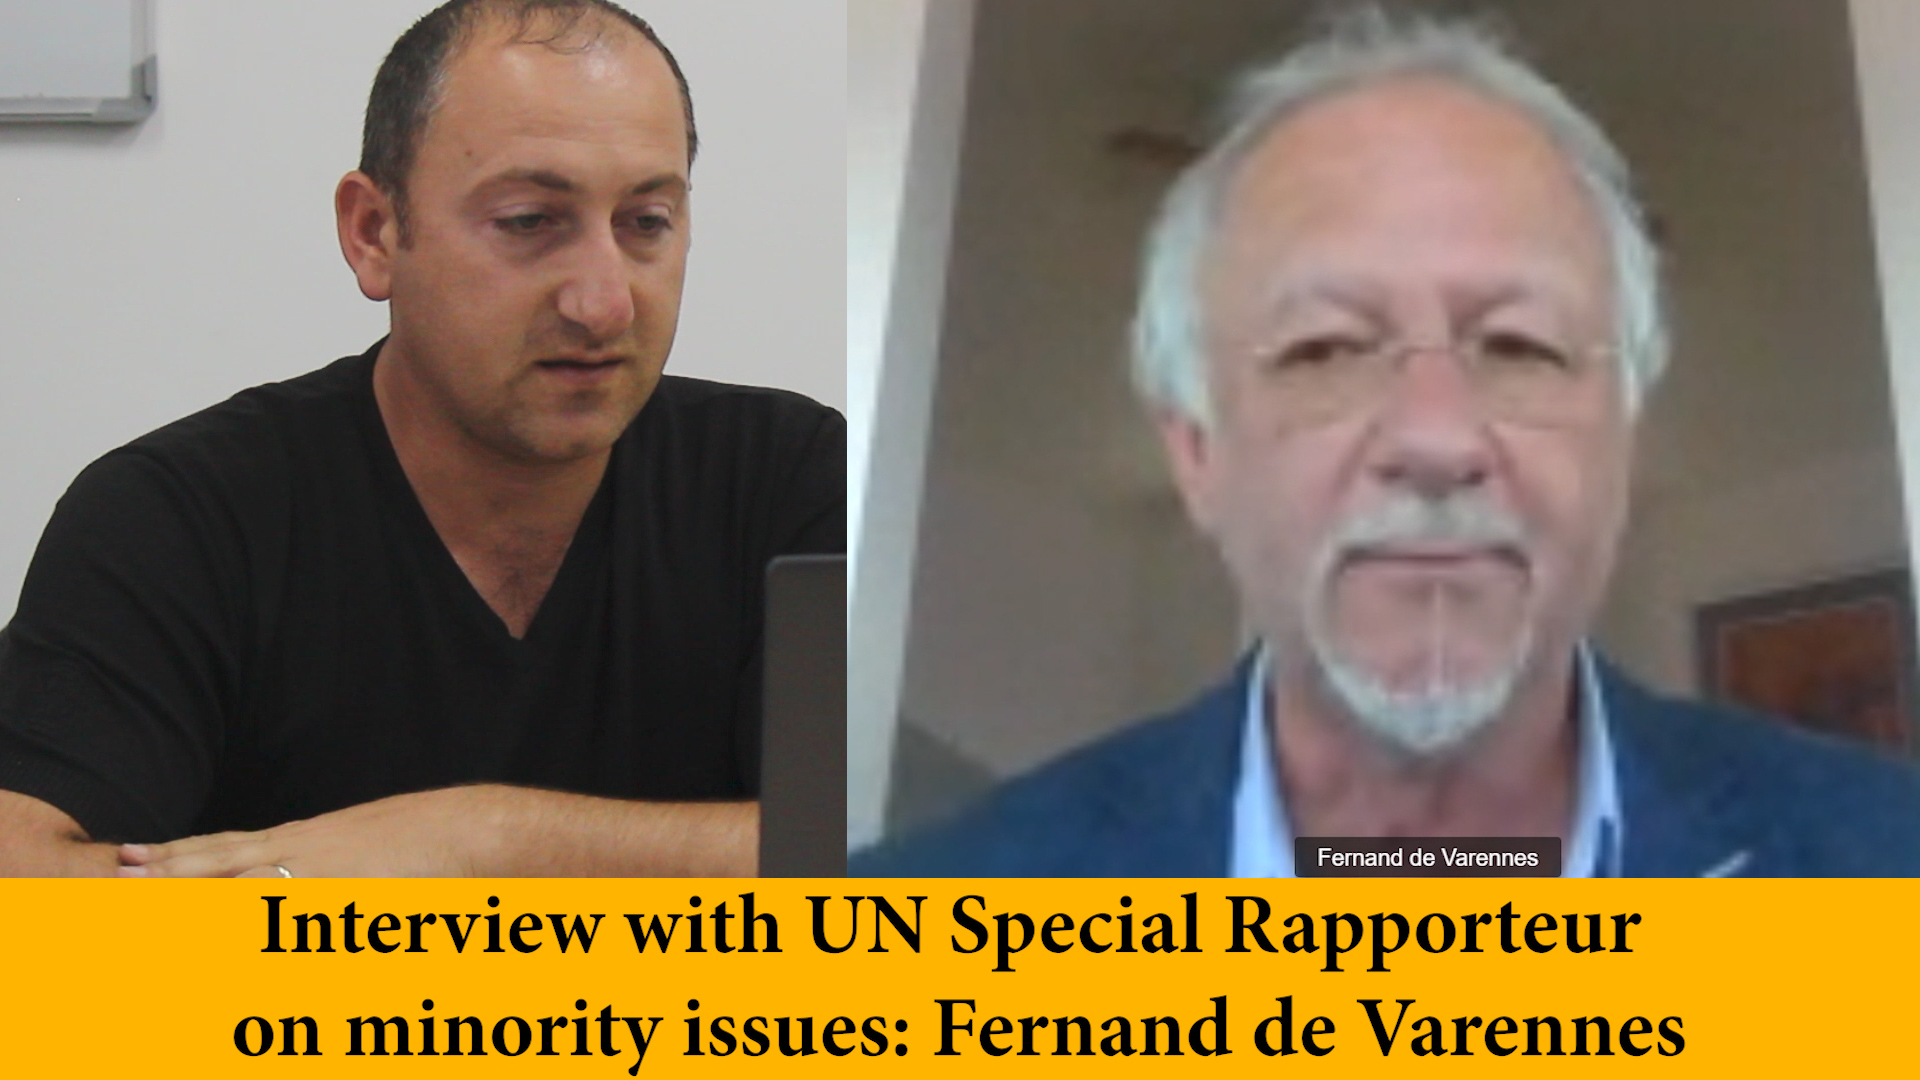 interview with Fernan the Varennes on European forum on narional minorities